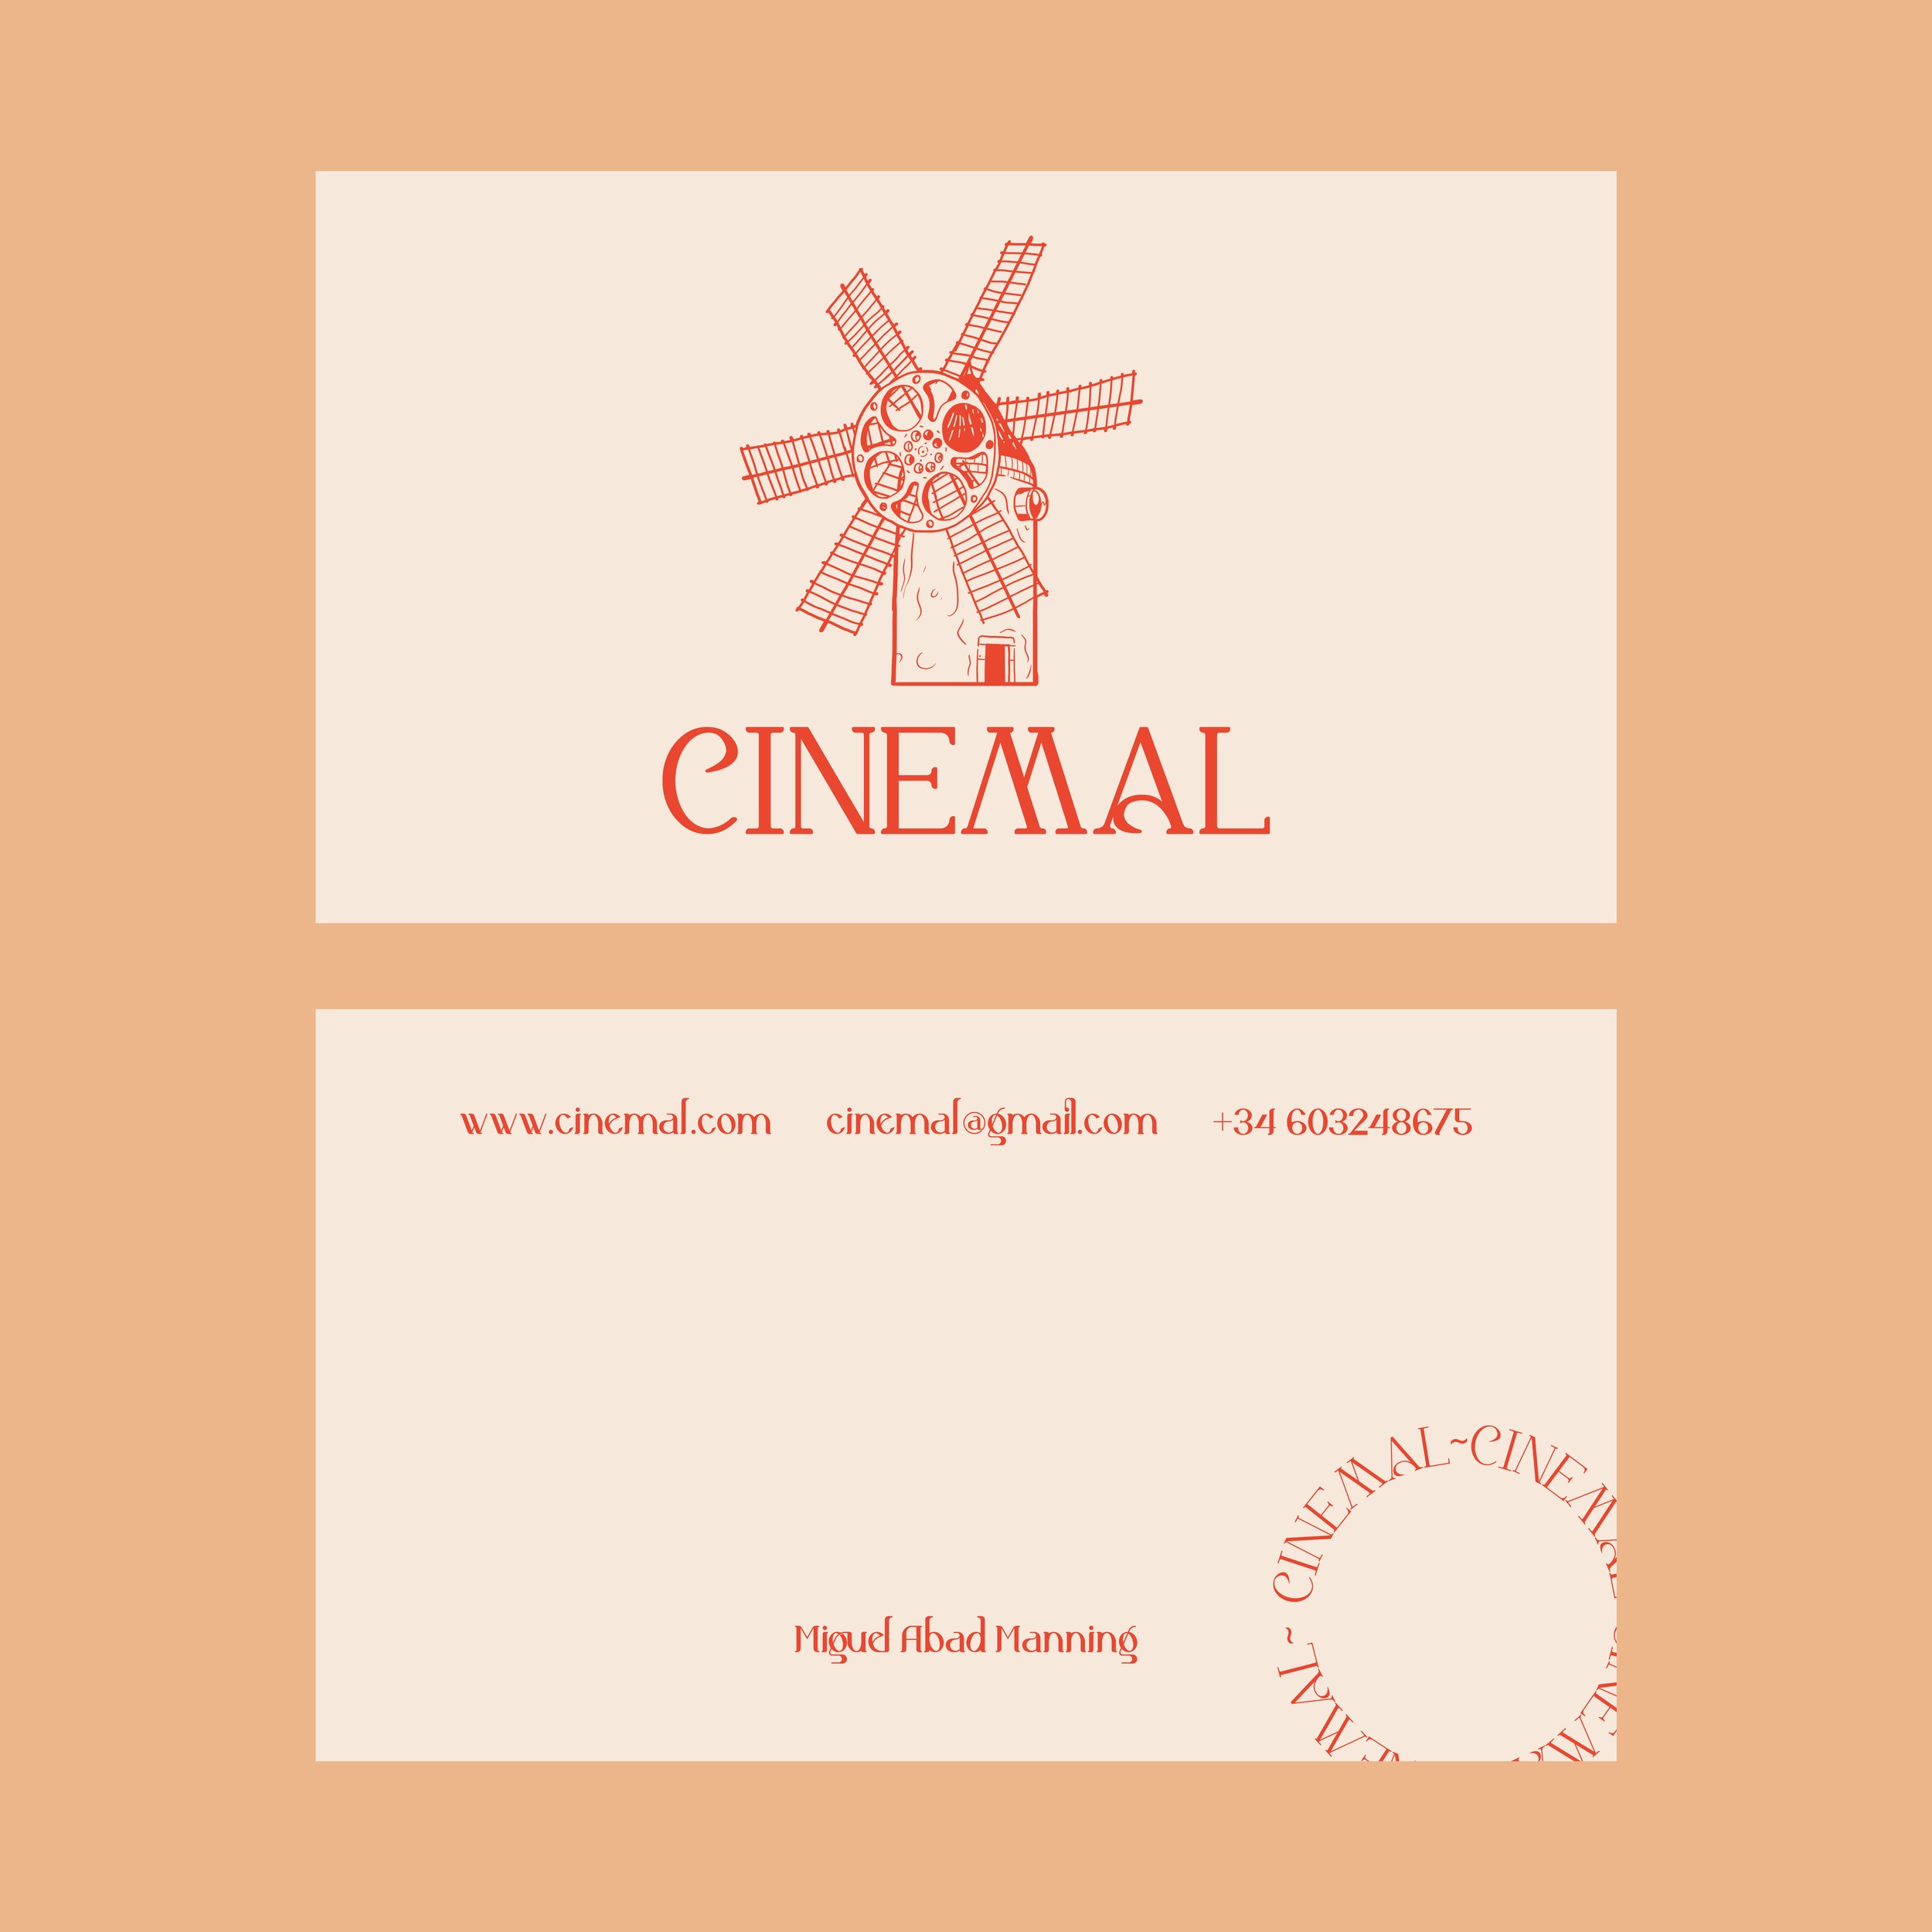 CINEMAL BUSINESS CARDS 1.2.jpg